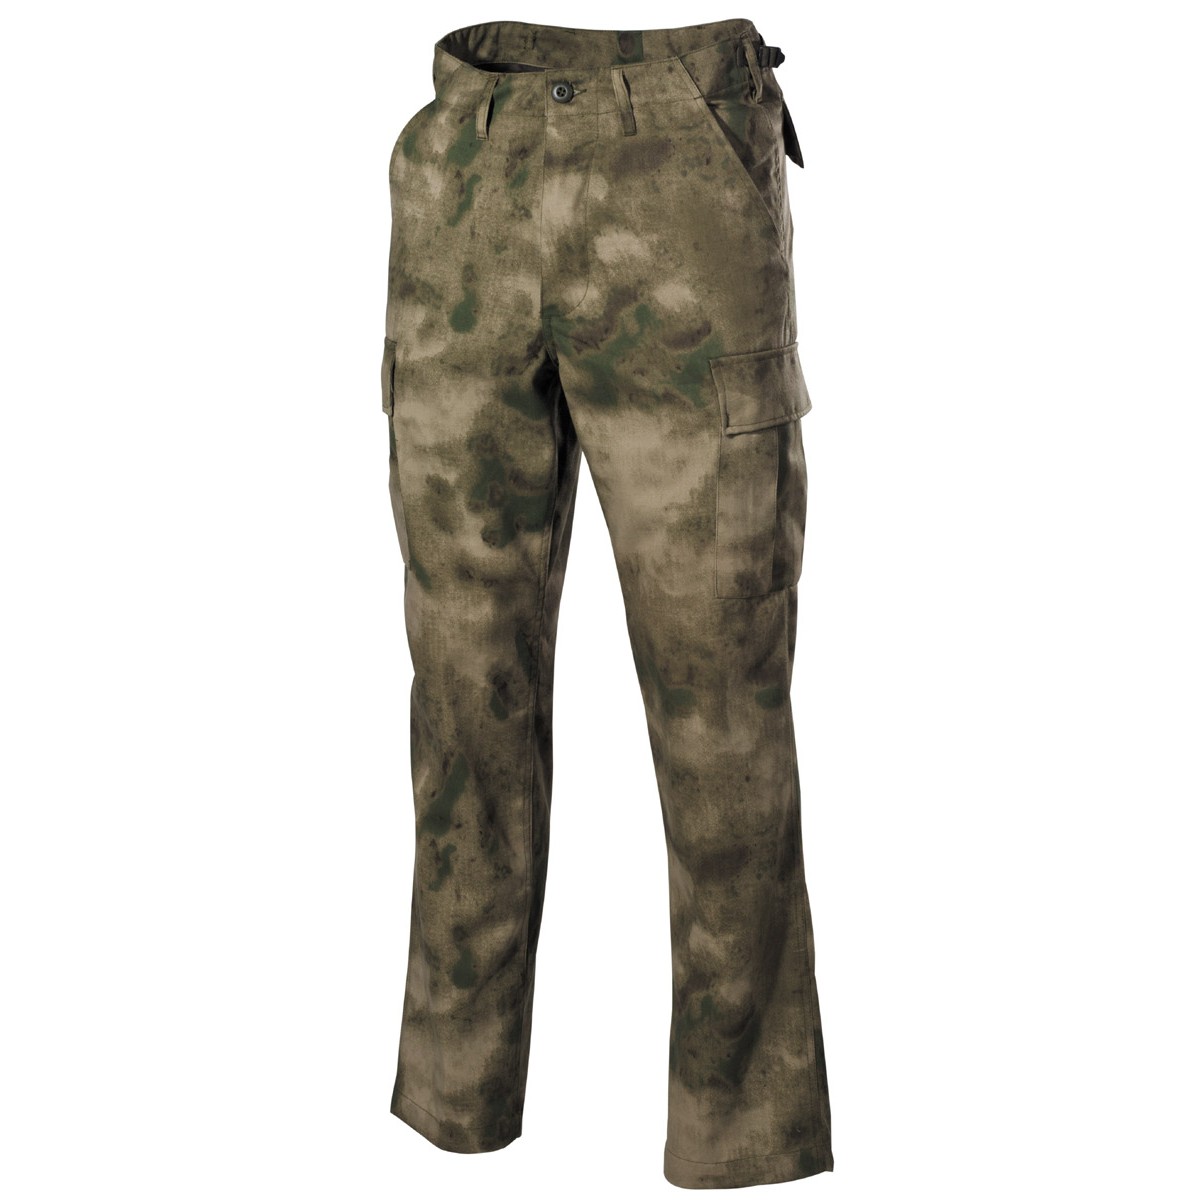 Kalhoty MFH US Ranger - HDT-camo FG, M